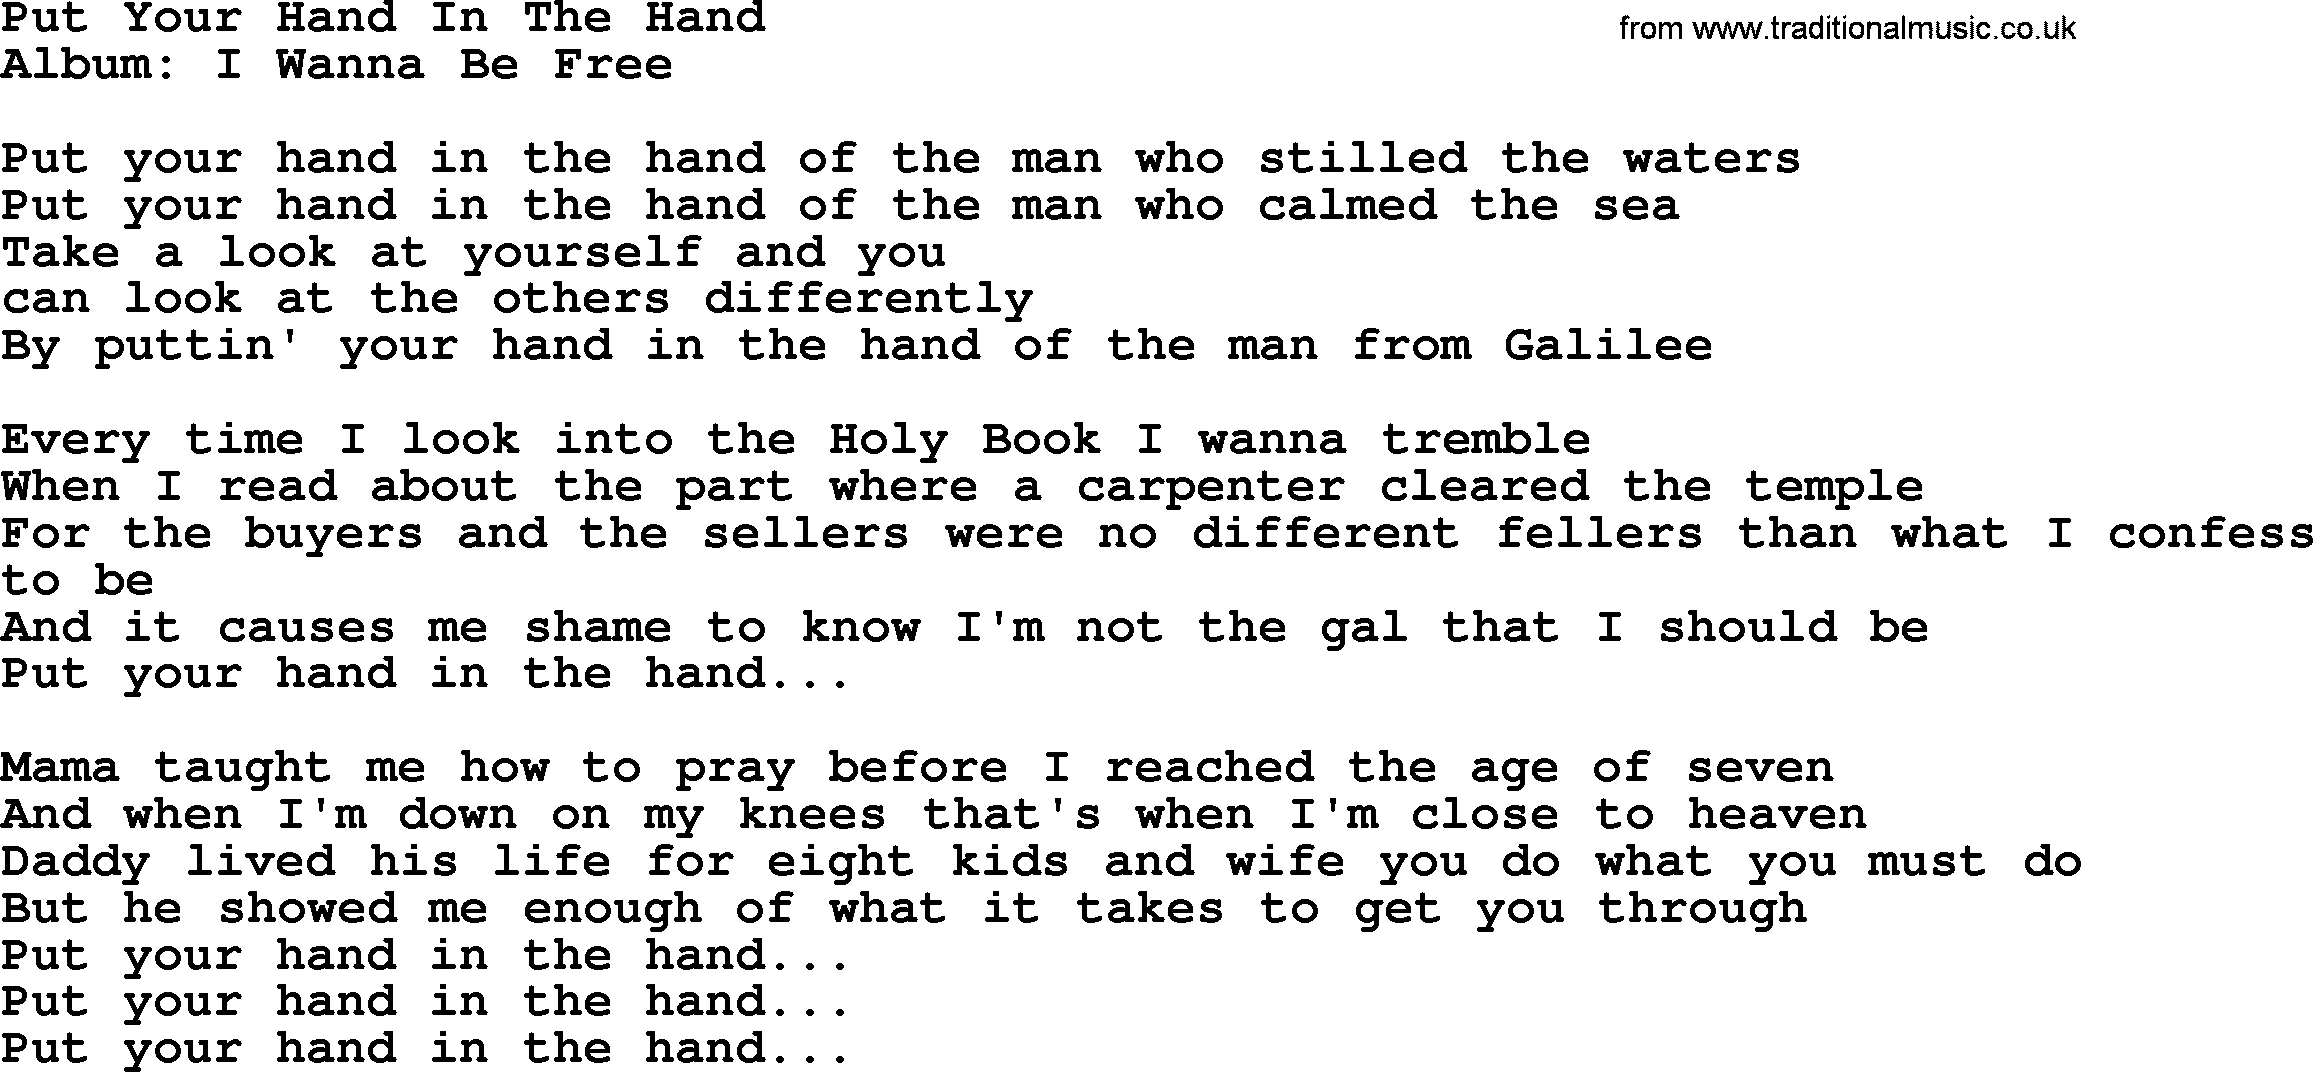 Loretta Lynn song: Put Your Hand In The Hand lyrics